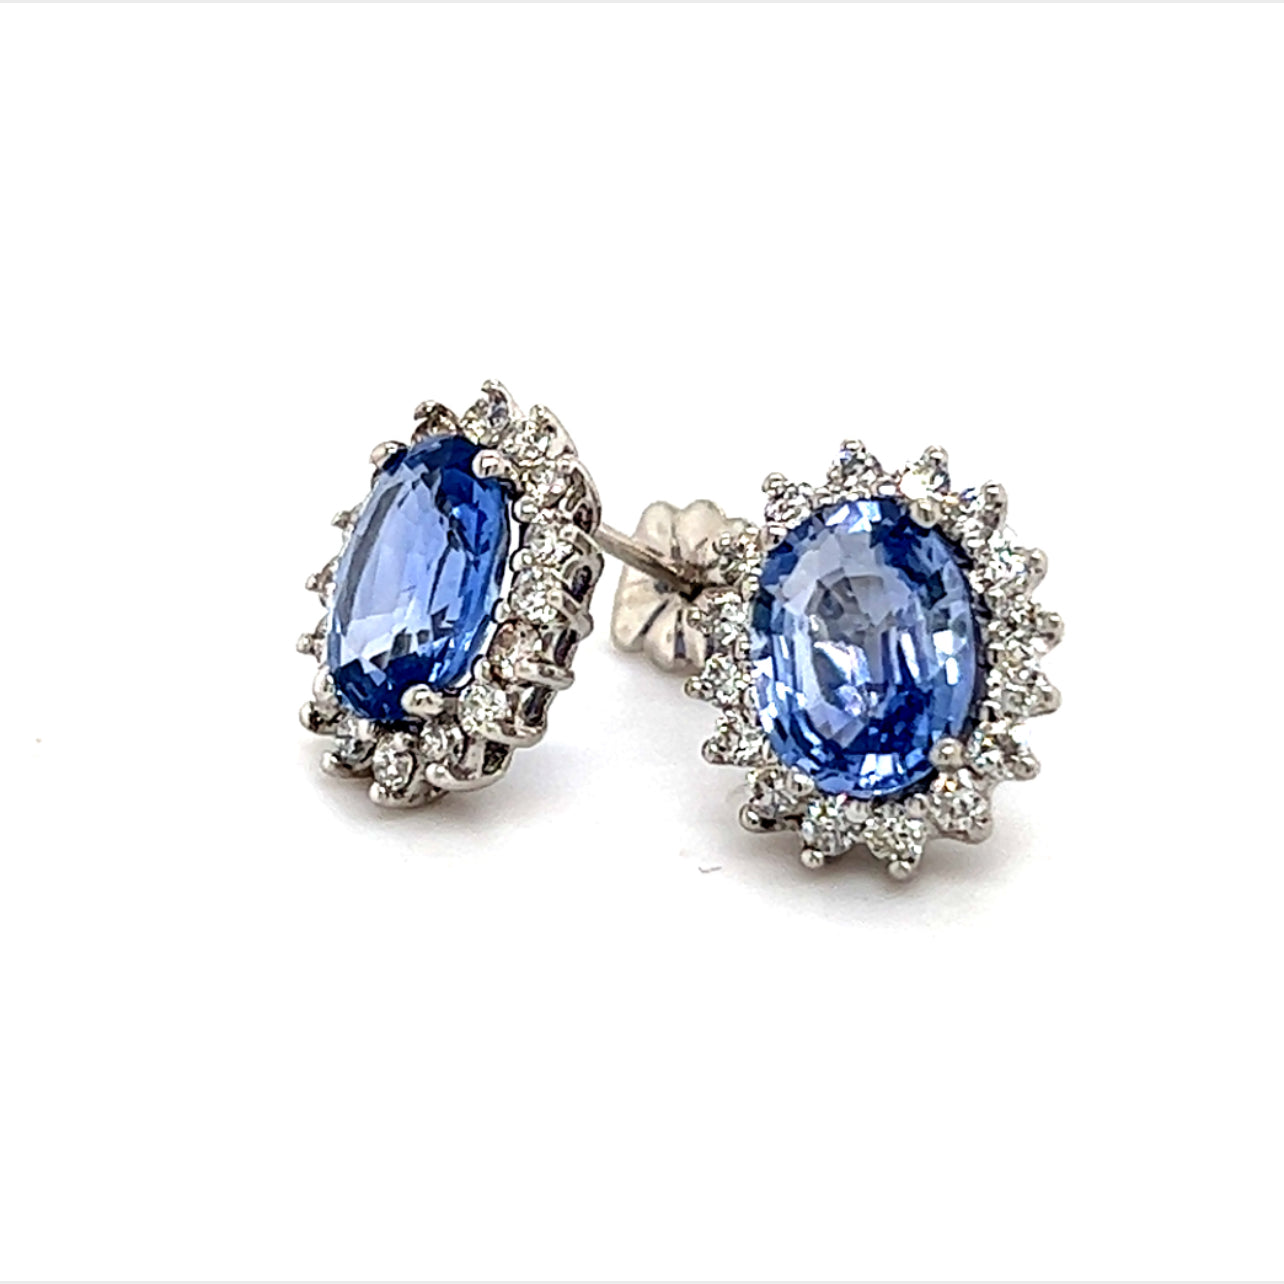 Natural Sapphire Diamond Earrings 14k Gold 3.2 TCW Certified $5,950 211909 - Certified Estate Jewelry